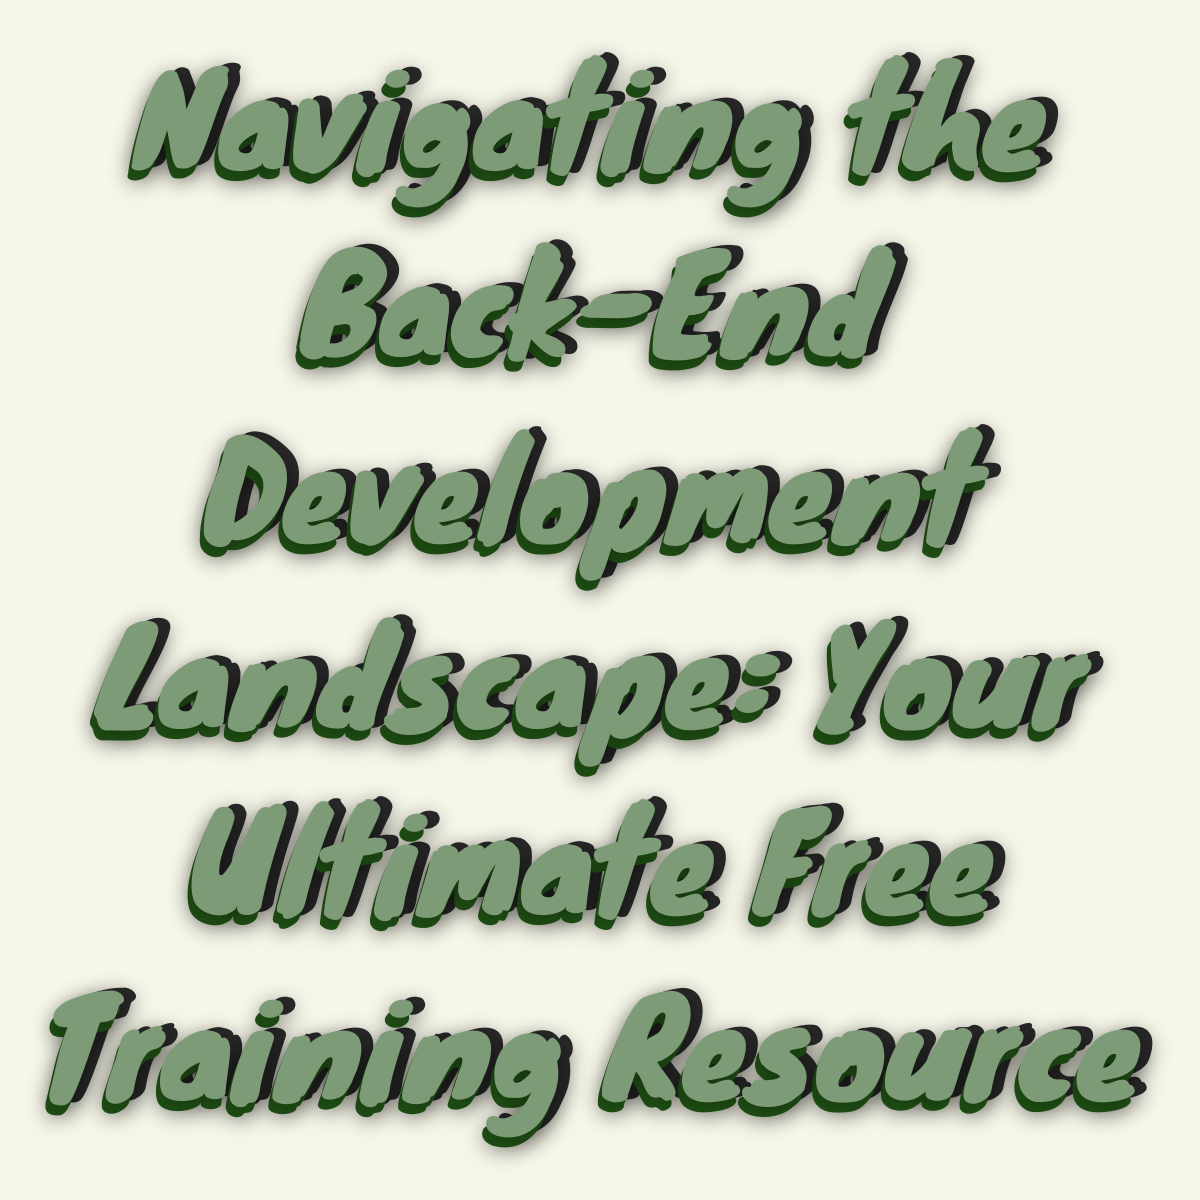 Navigating-the-Back-End-Development-Landscape-Your-Ultimate-Free-Training-Resource.png